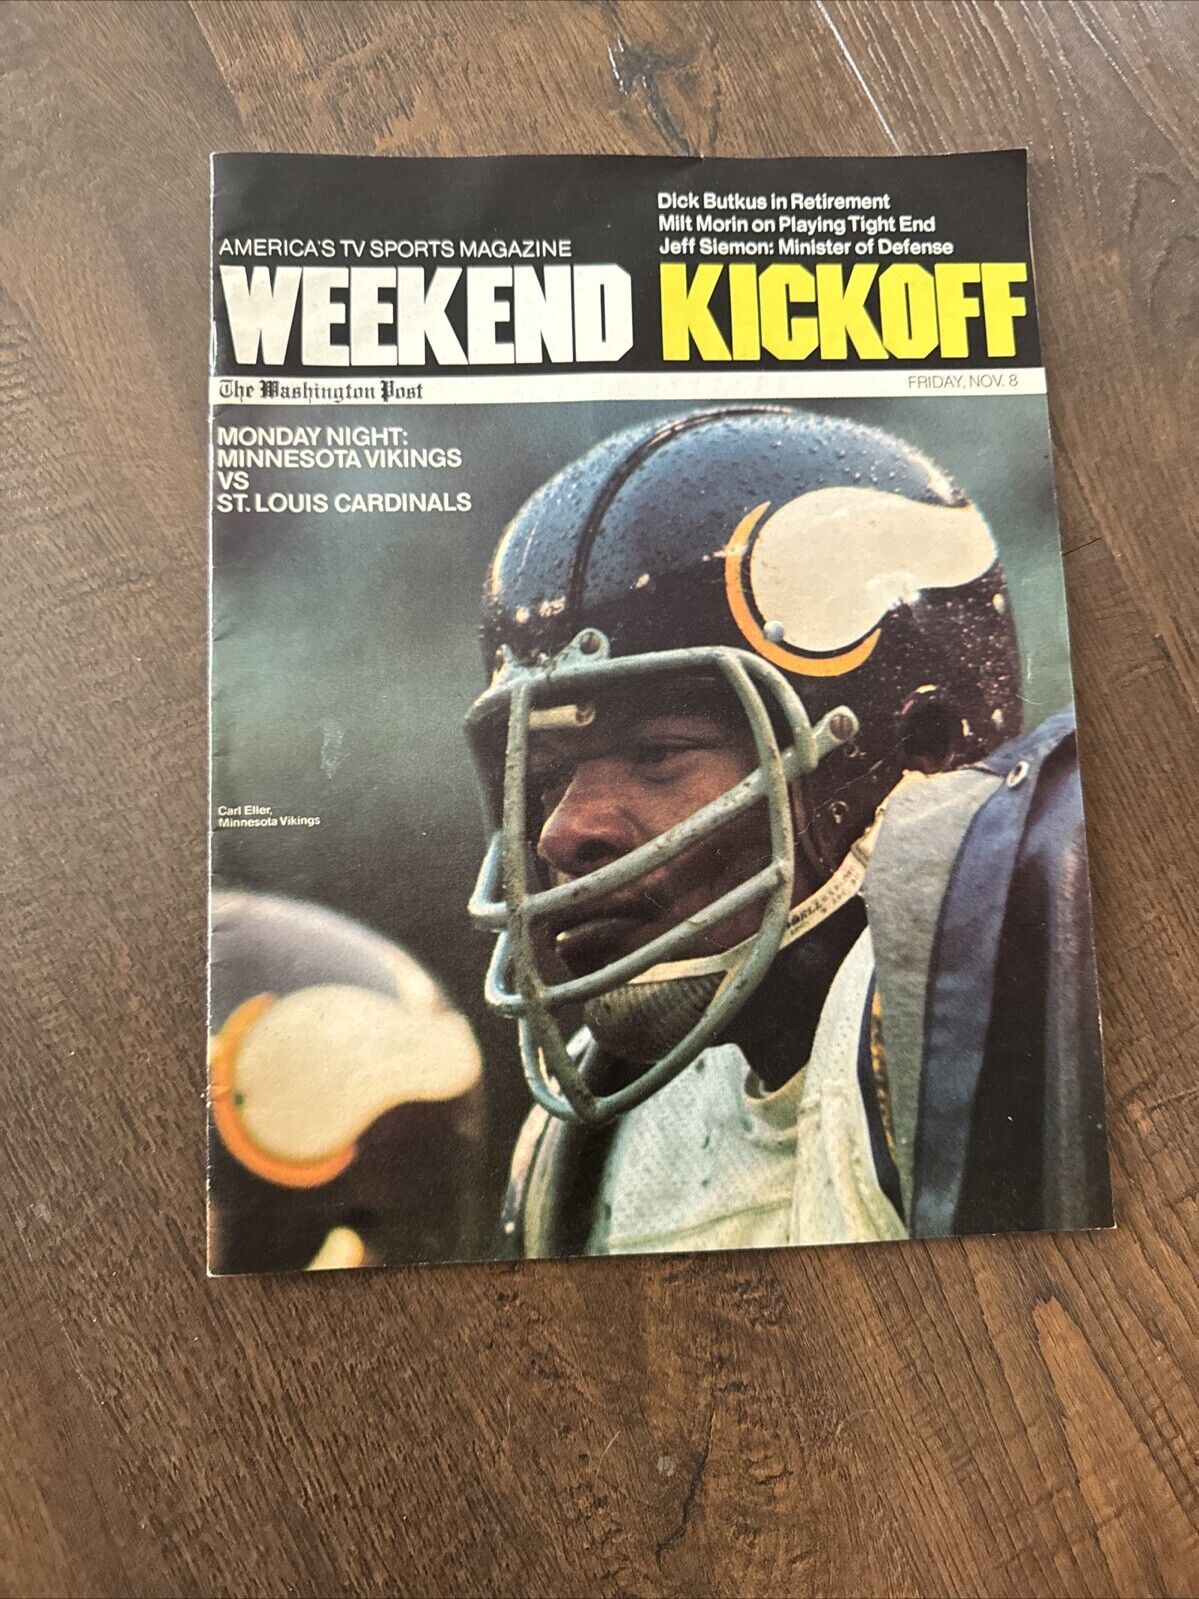 Great Condition 1974 Magazine Weekend Kickoff Washington Post Friday Nov, 8th